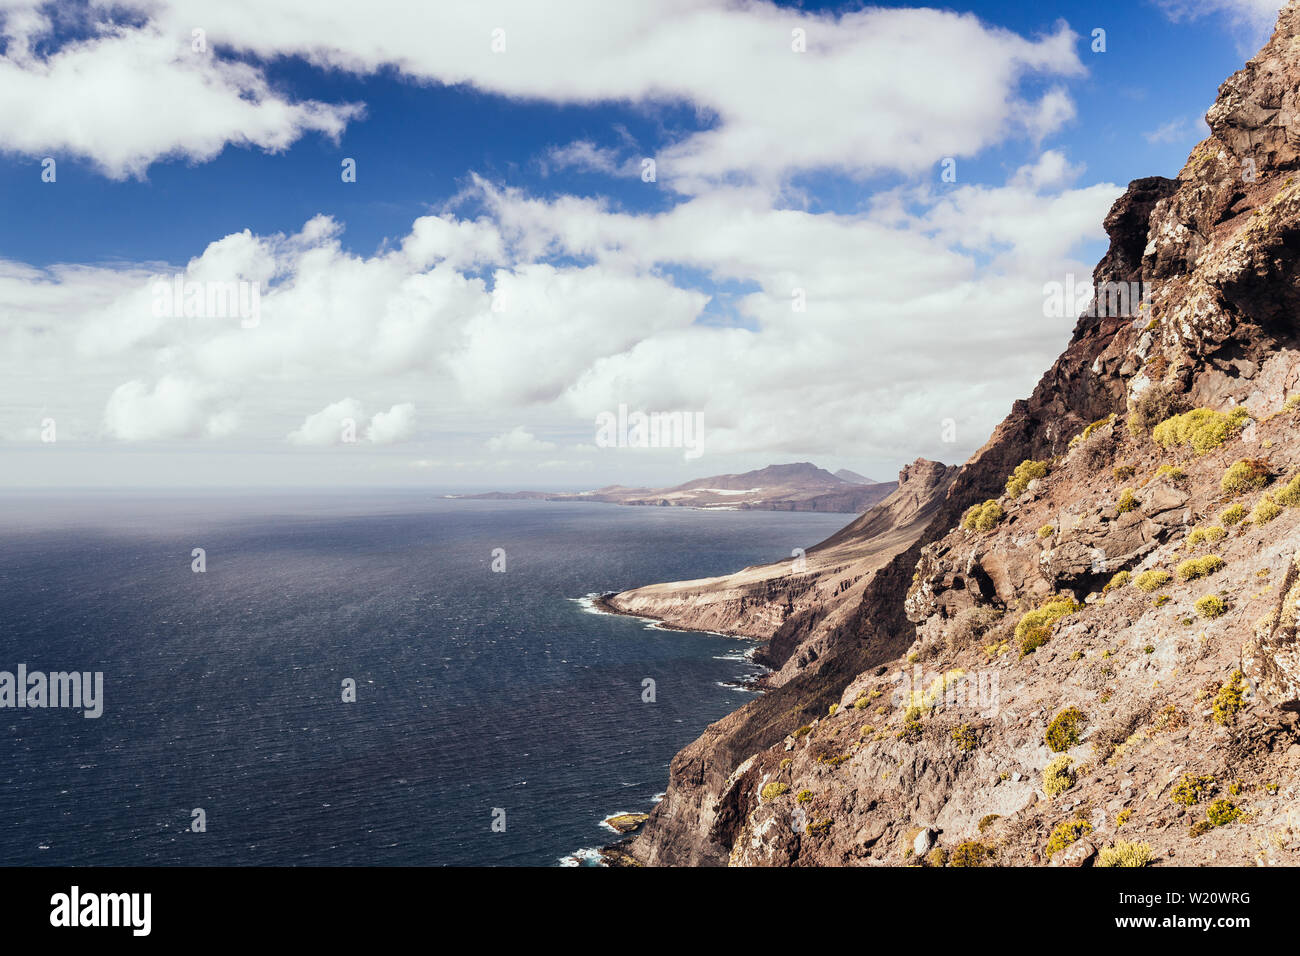 Natur und Landschaft der Gran Canaria. Felsigen Berge, Täler, Meer. Stockfoto